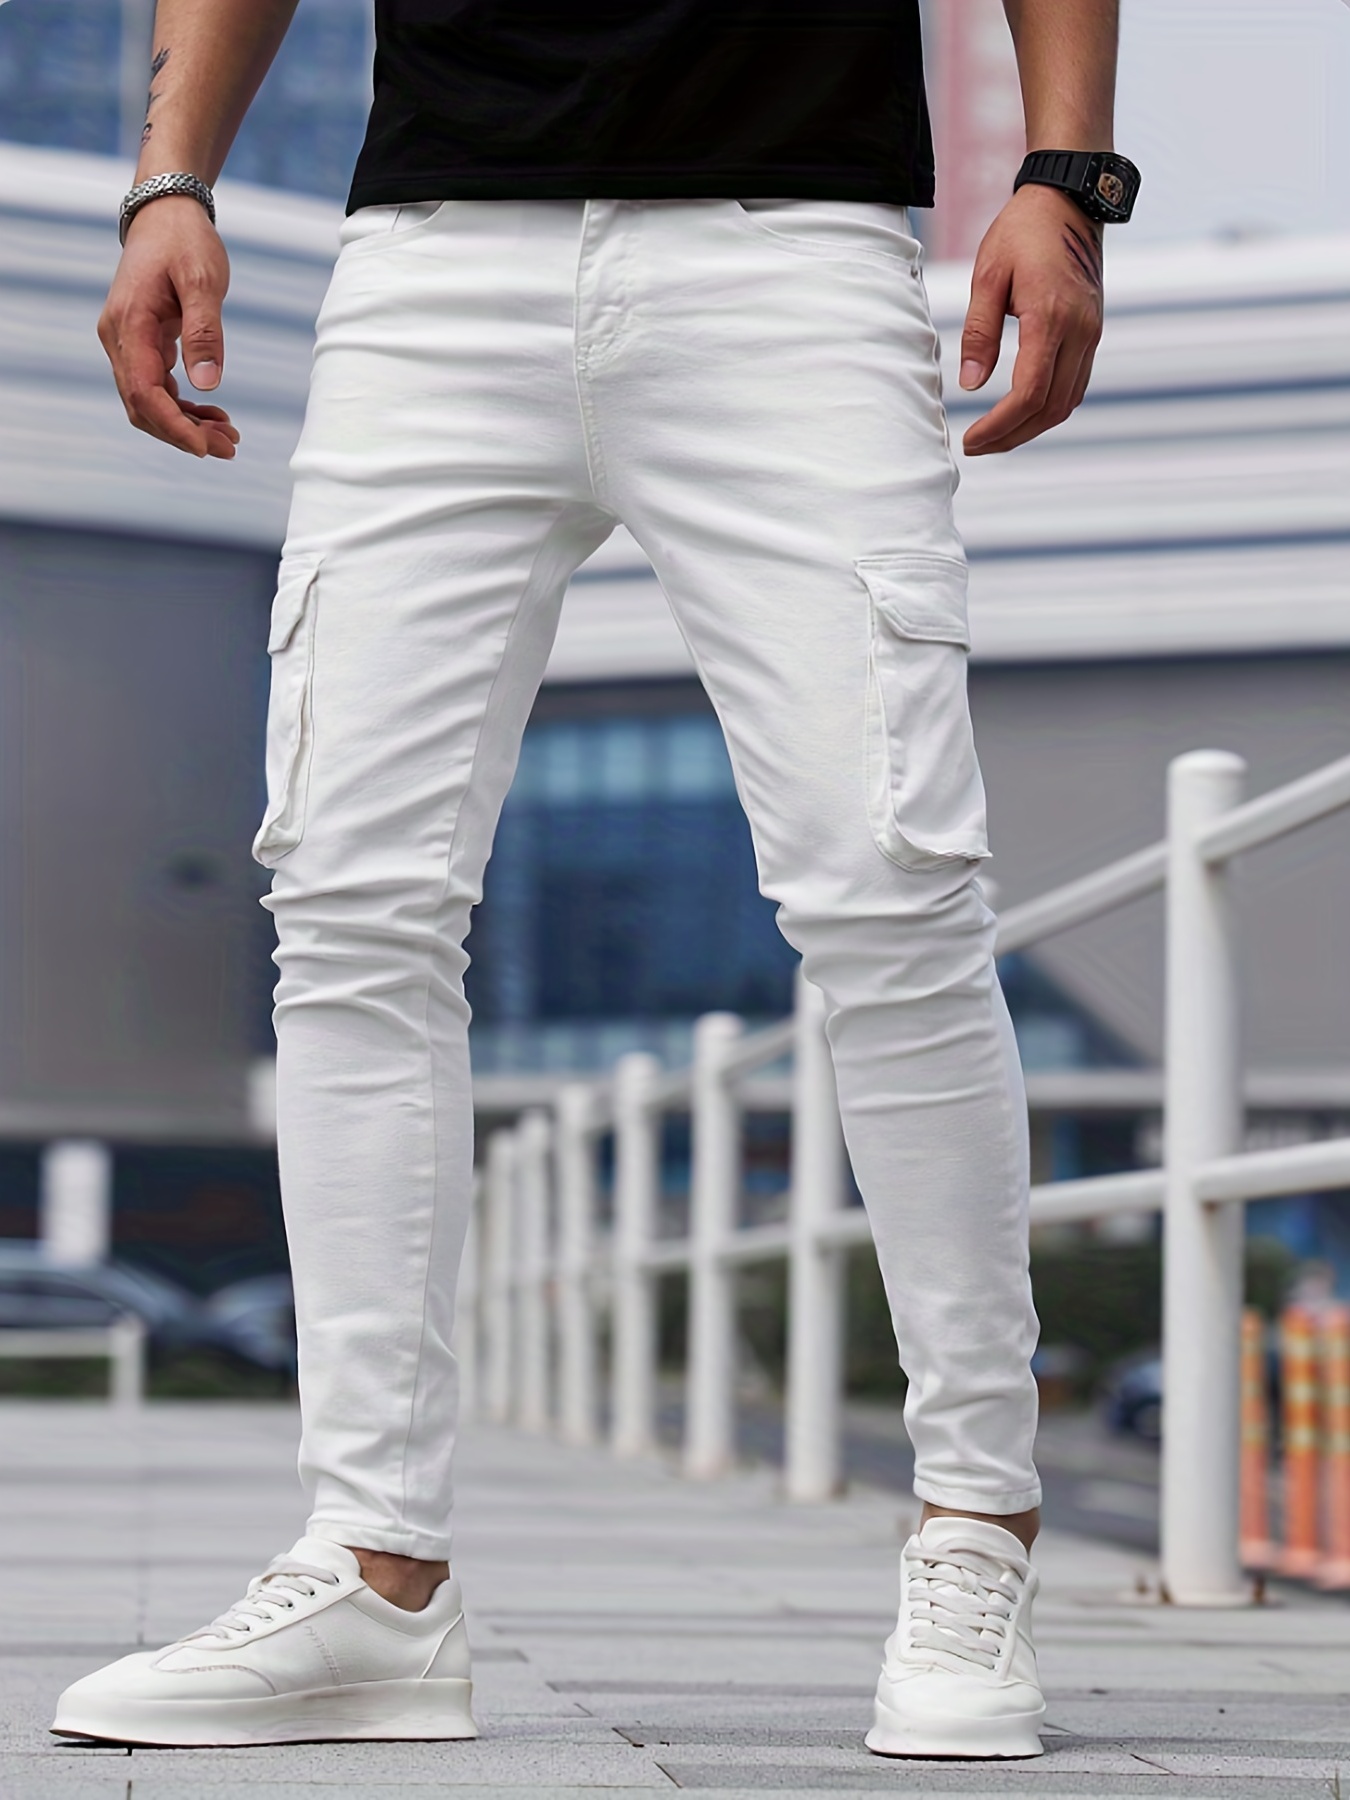 When To Wear White Pants For Men | Black Lapel